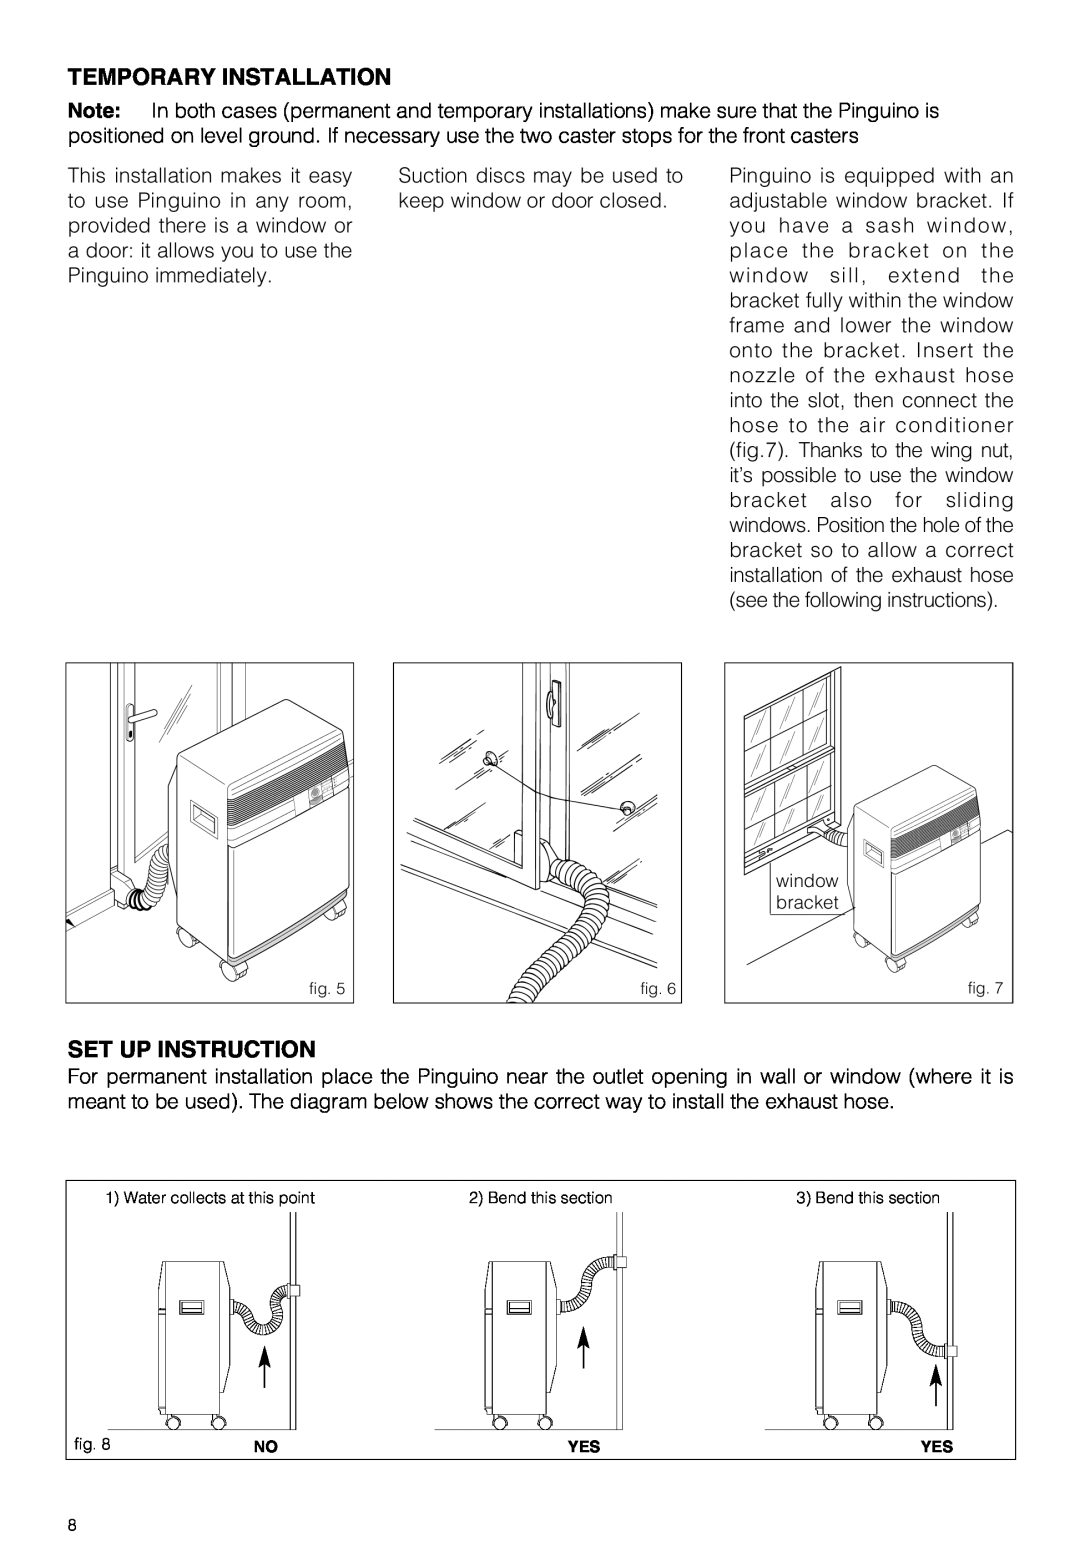 DeLonghi PAC 210 U owner manual Temporary Installation, Set Up Instruction, window, bracket 